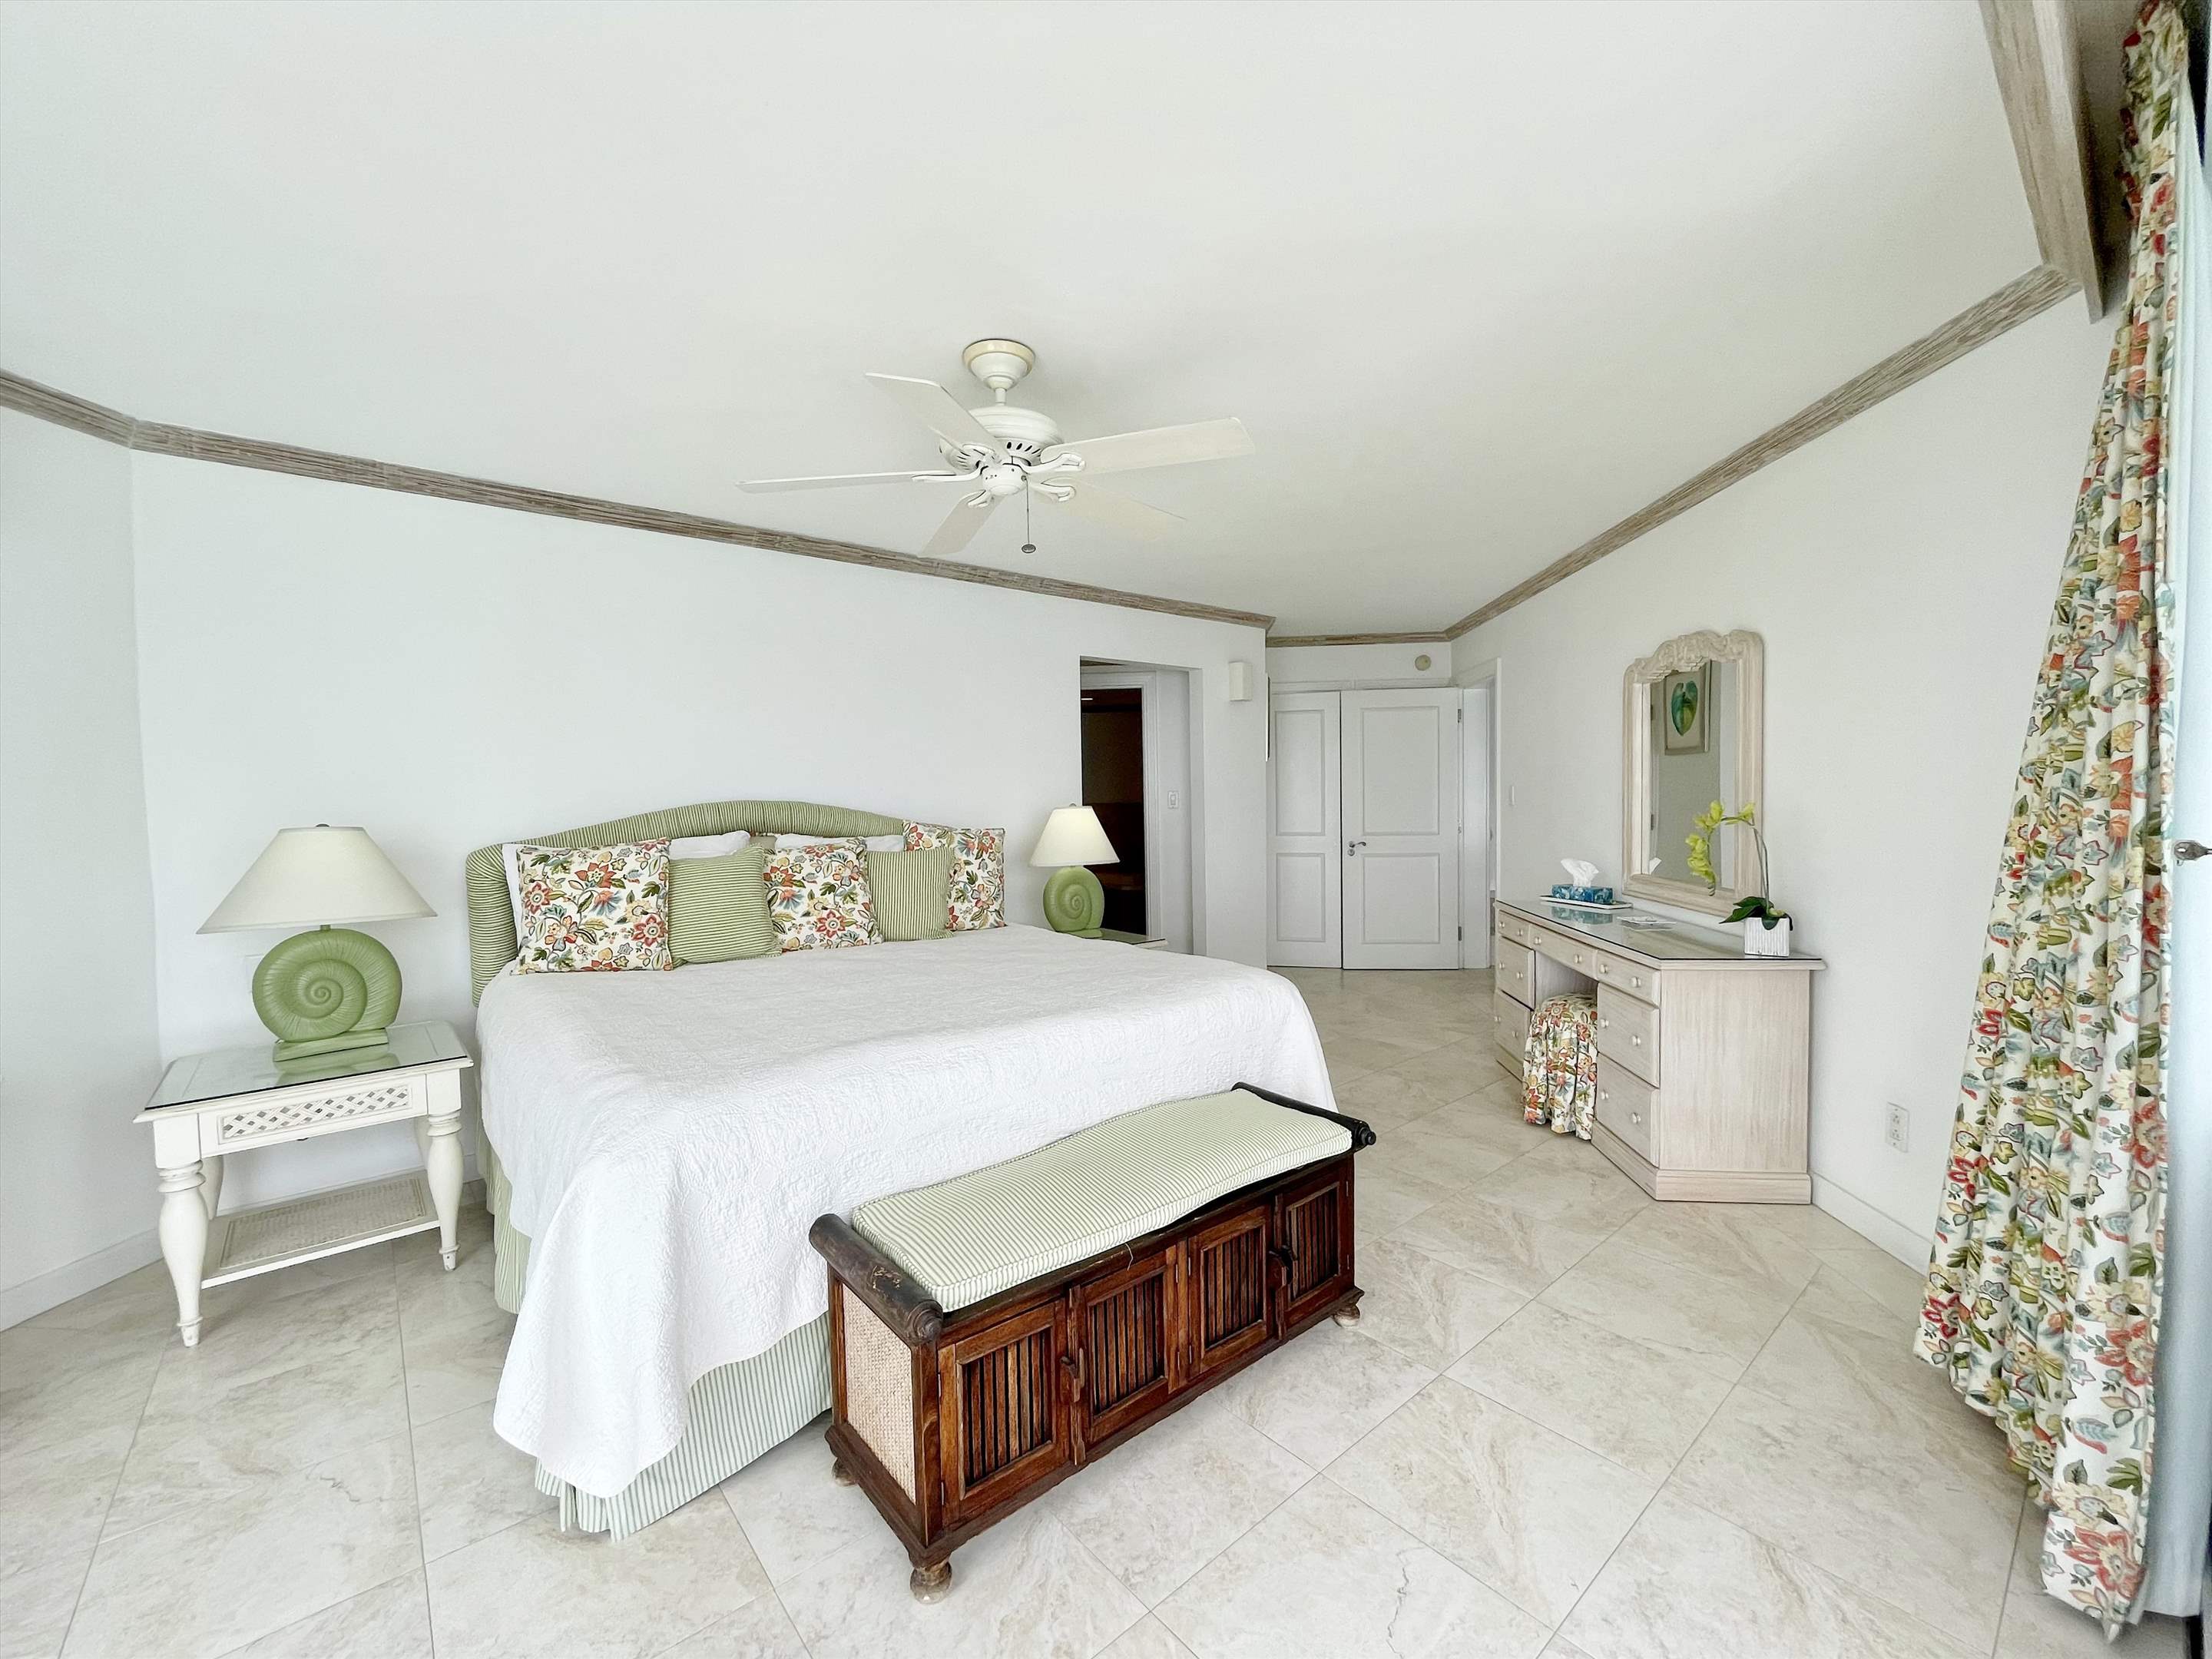 Villas on the Beach 403, 2 bedroom, 2 bedroom apartment in St. James & West Coast, Barbados Photo #9